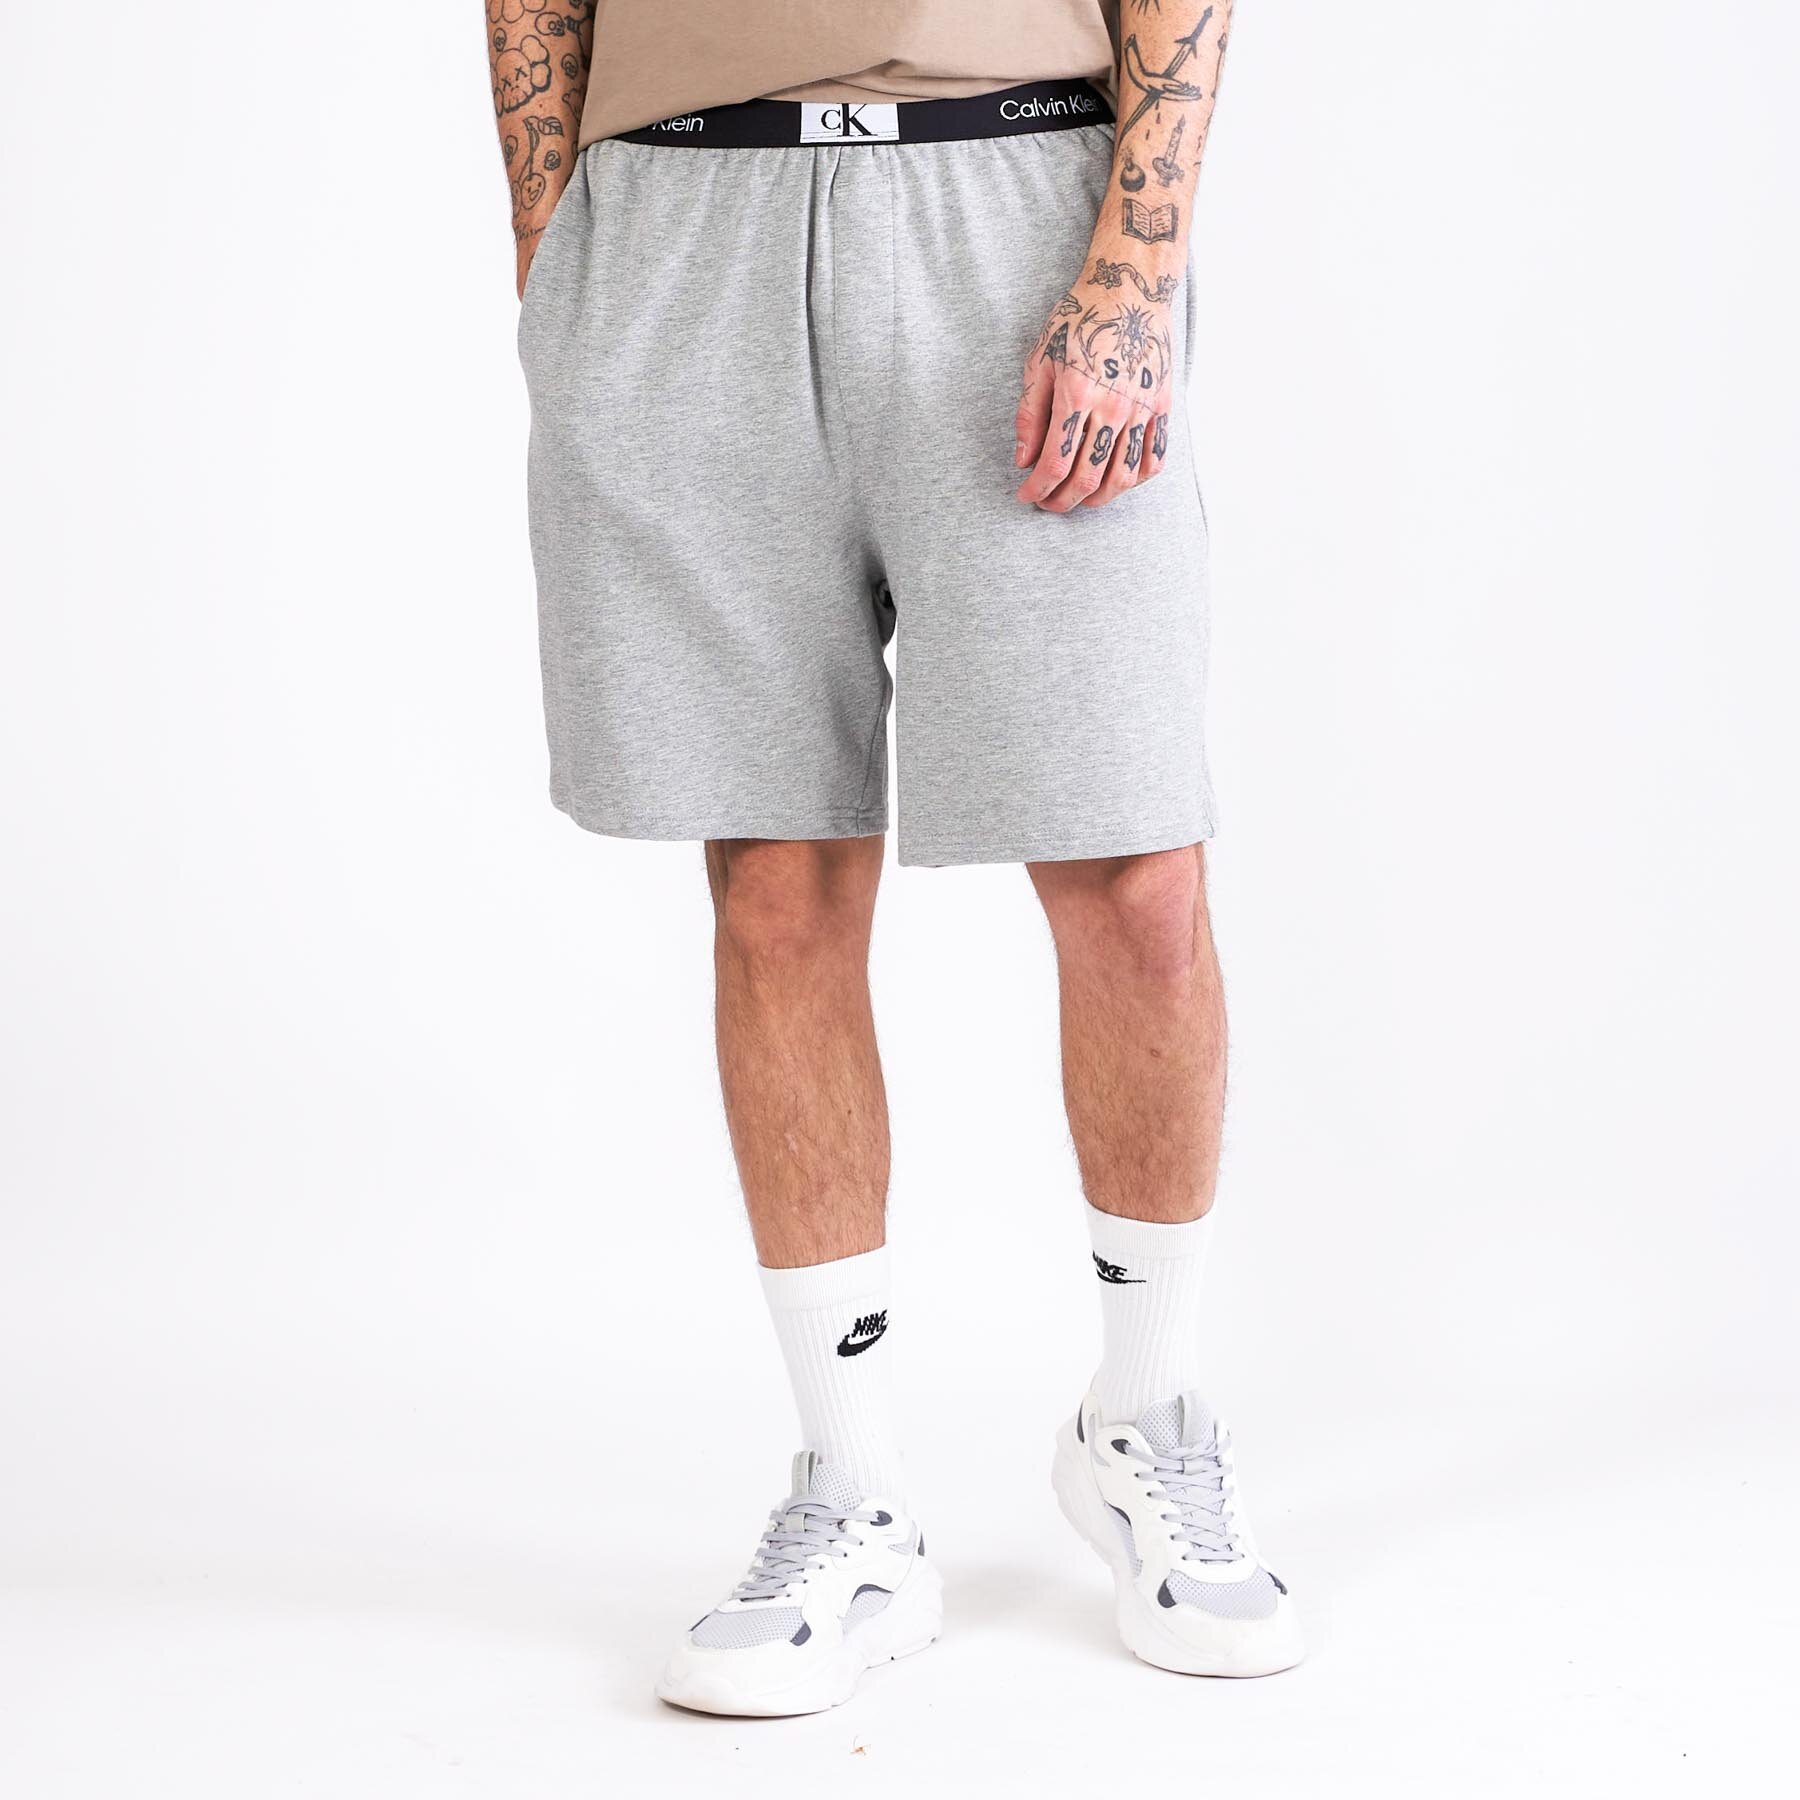 Calvin Klein - Sleep shorts - Herreshorts - GREY HEATHER - S